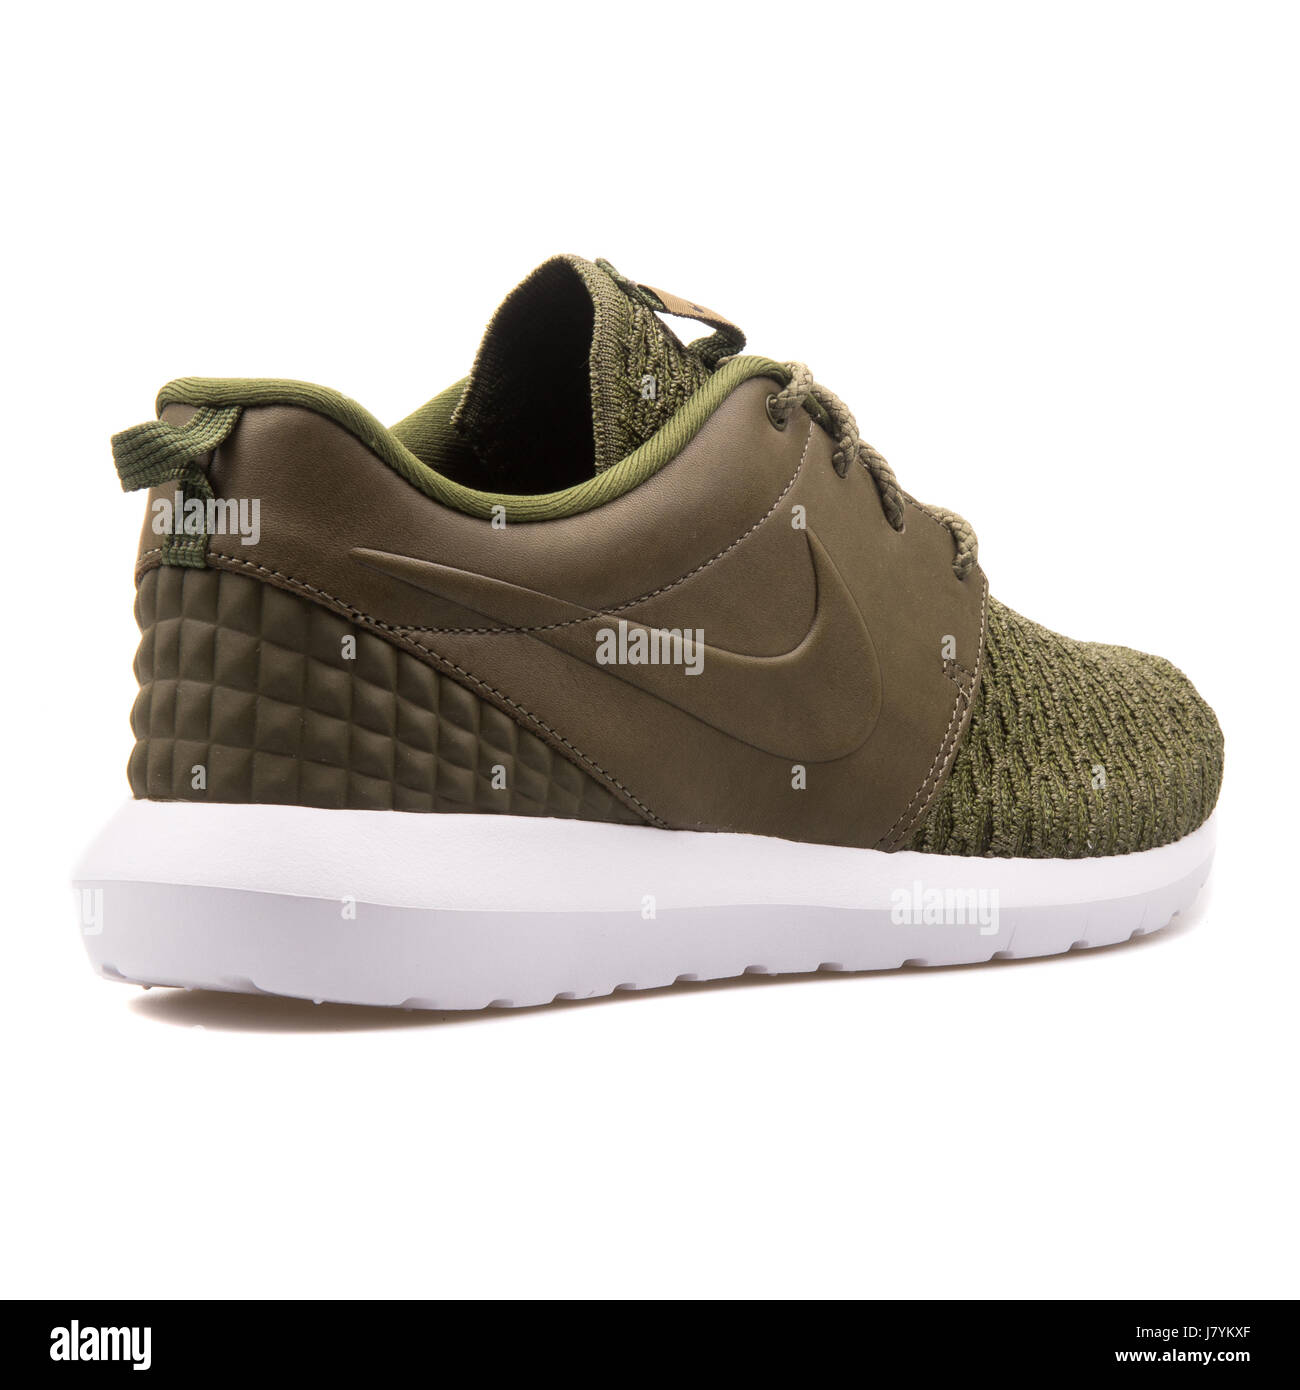 Nike Roshe NM Flyknit PRM grün Herren Sneakers - 746825-300 Stockfotografie - Alamy